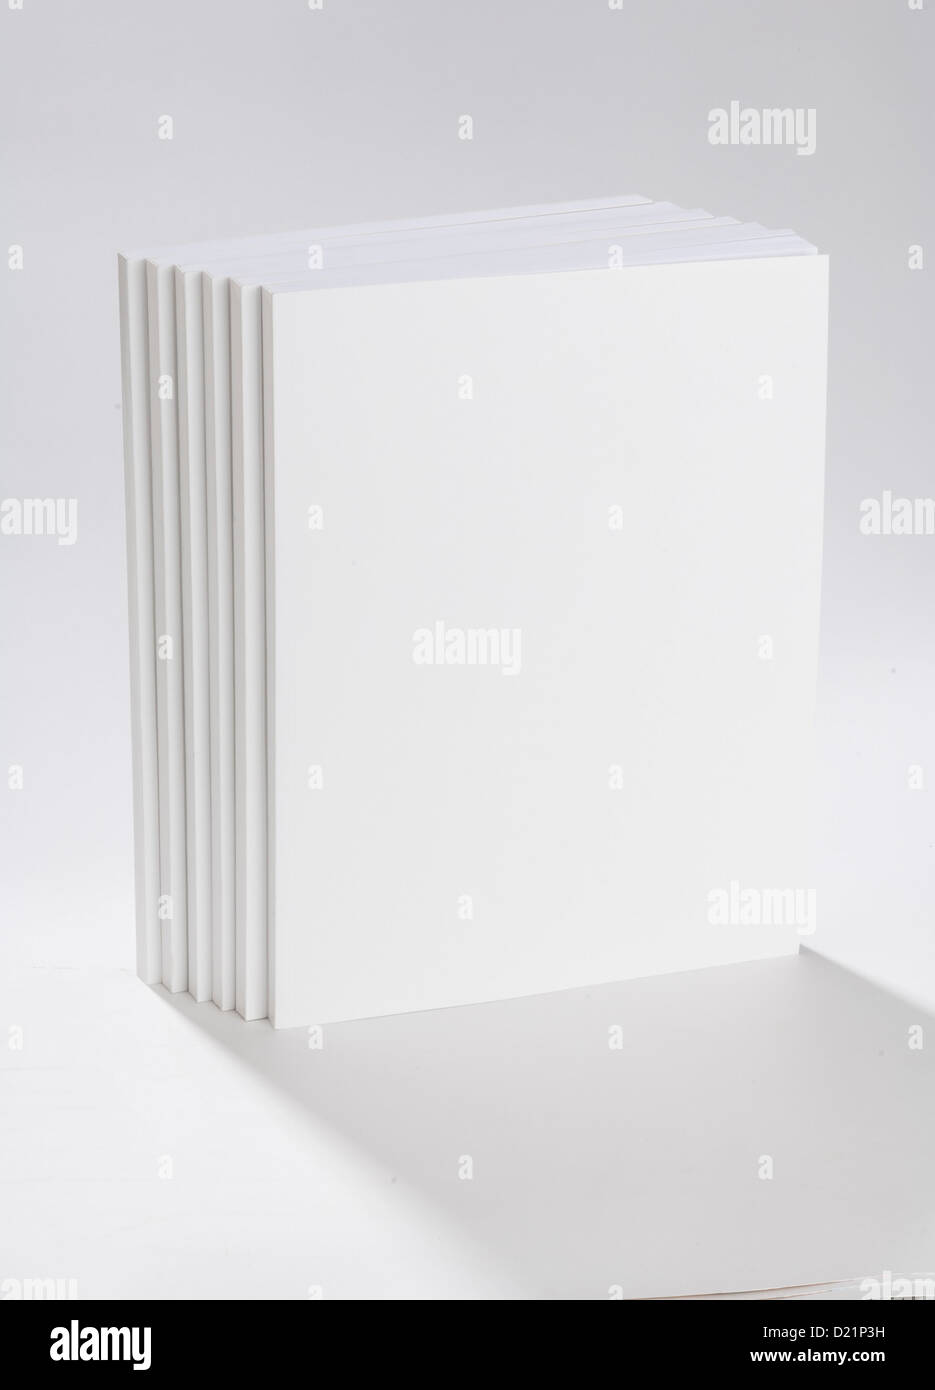 Six blank books on white ground Stock Photo